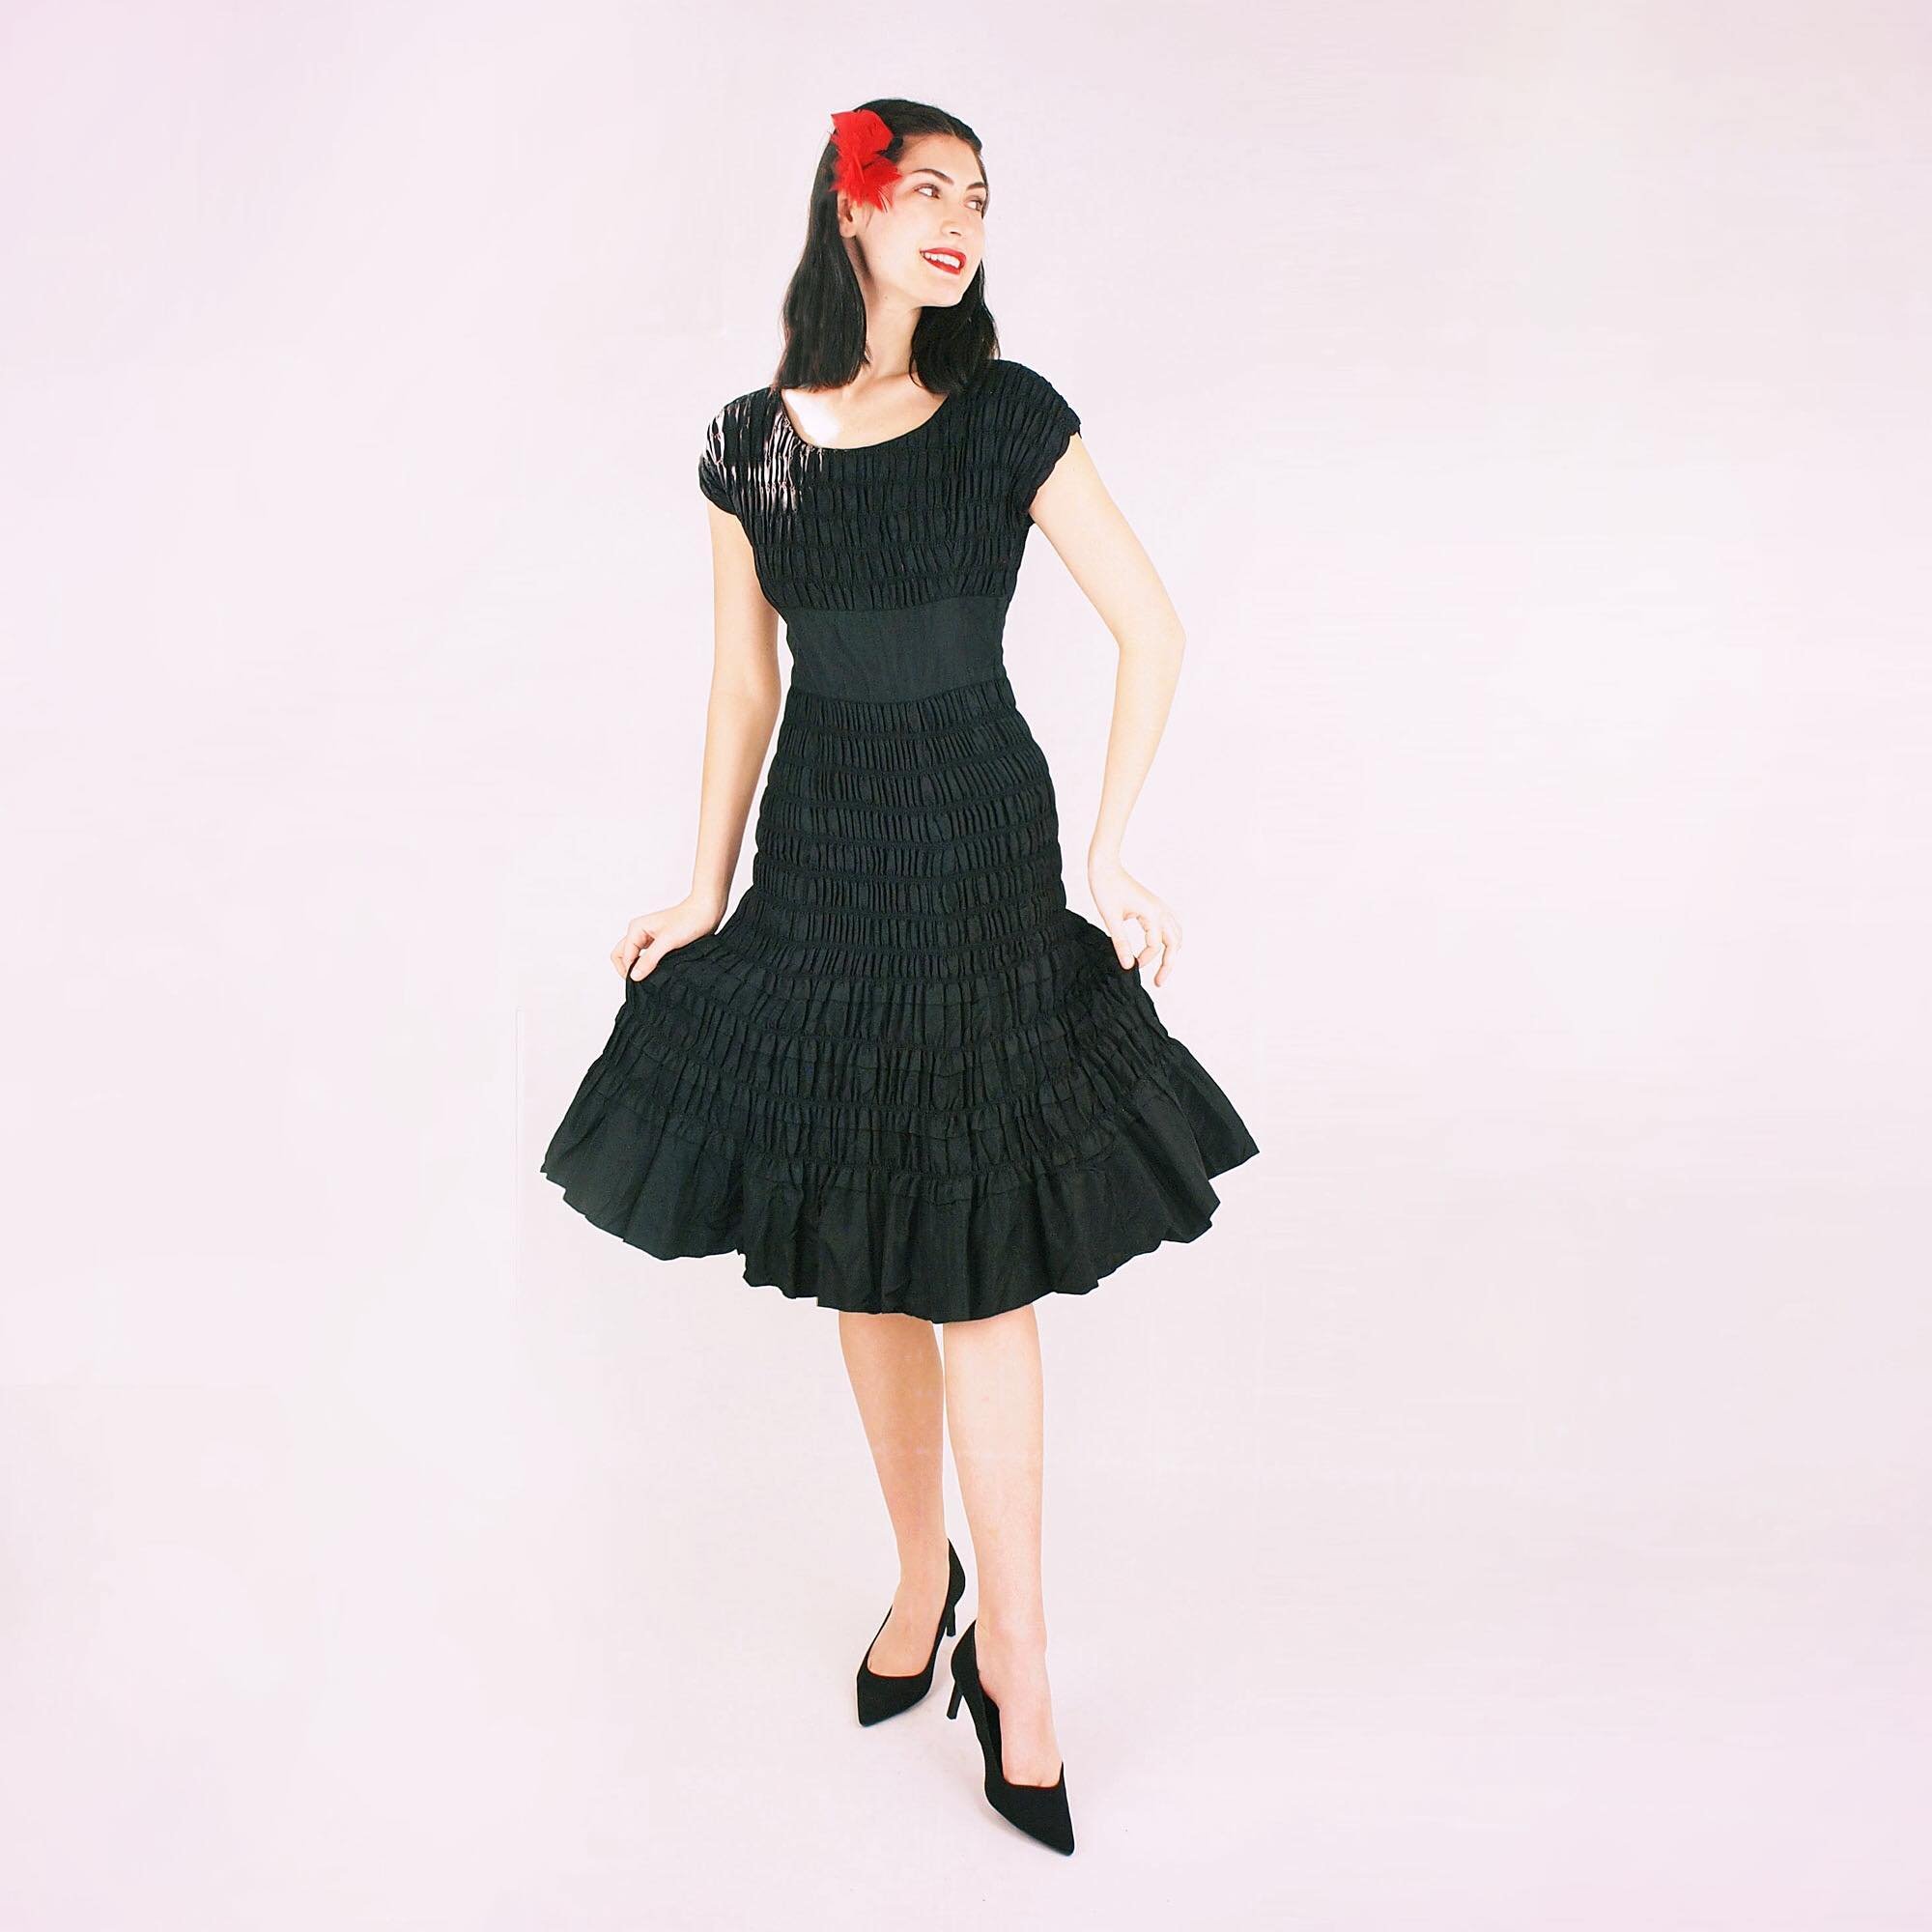 Tango anyone? 💃🏻 This 50s ruched taffeta dress is up for it! 

Model: @ceydarofficial (Love this pose Ceydar!)

#denisebrainvintage
#spokanemodel
#spokanevintage
#thevfg
#shopvfg
#truevintagevfg
#50sblackdress 
#ruchingdress